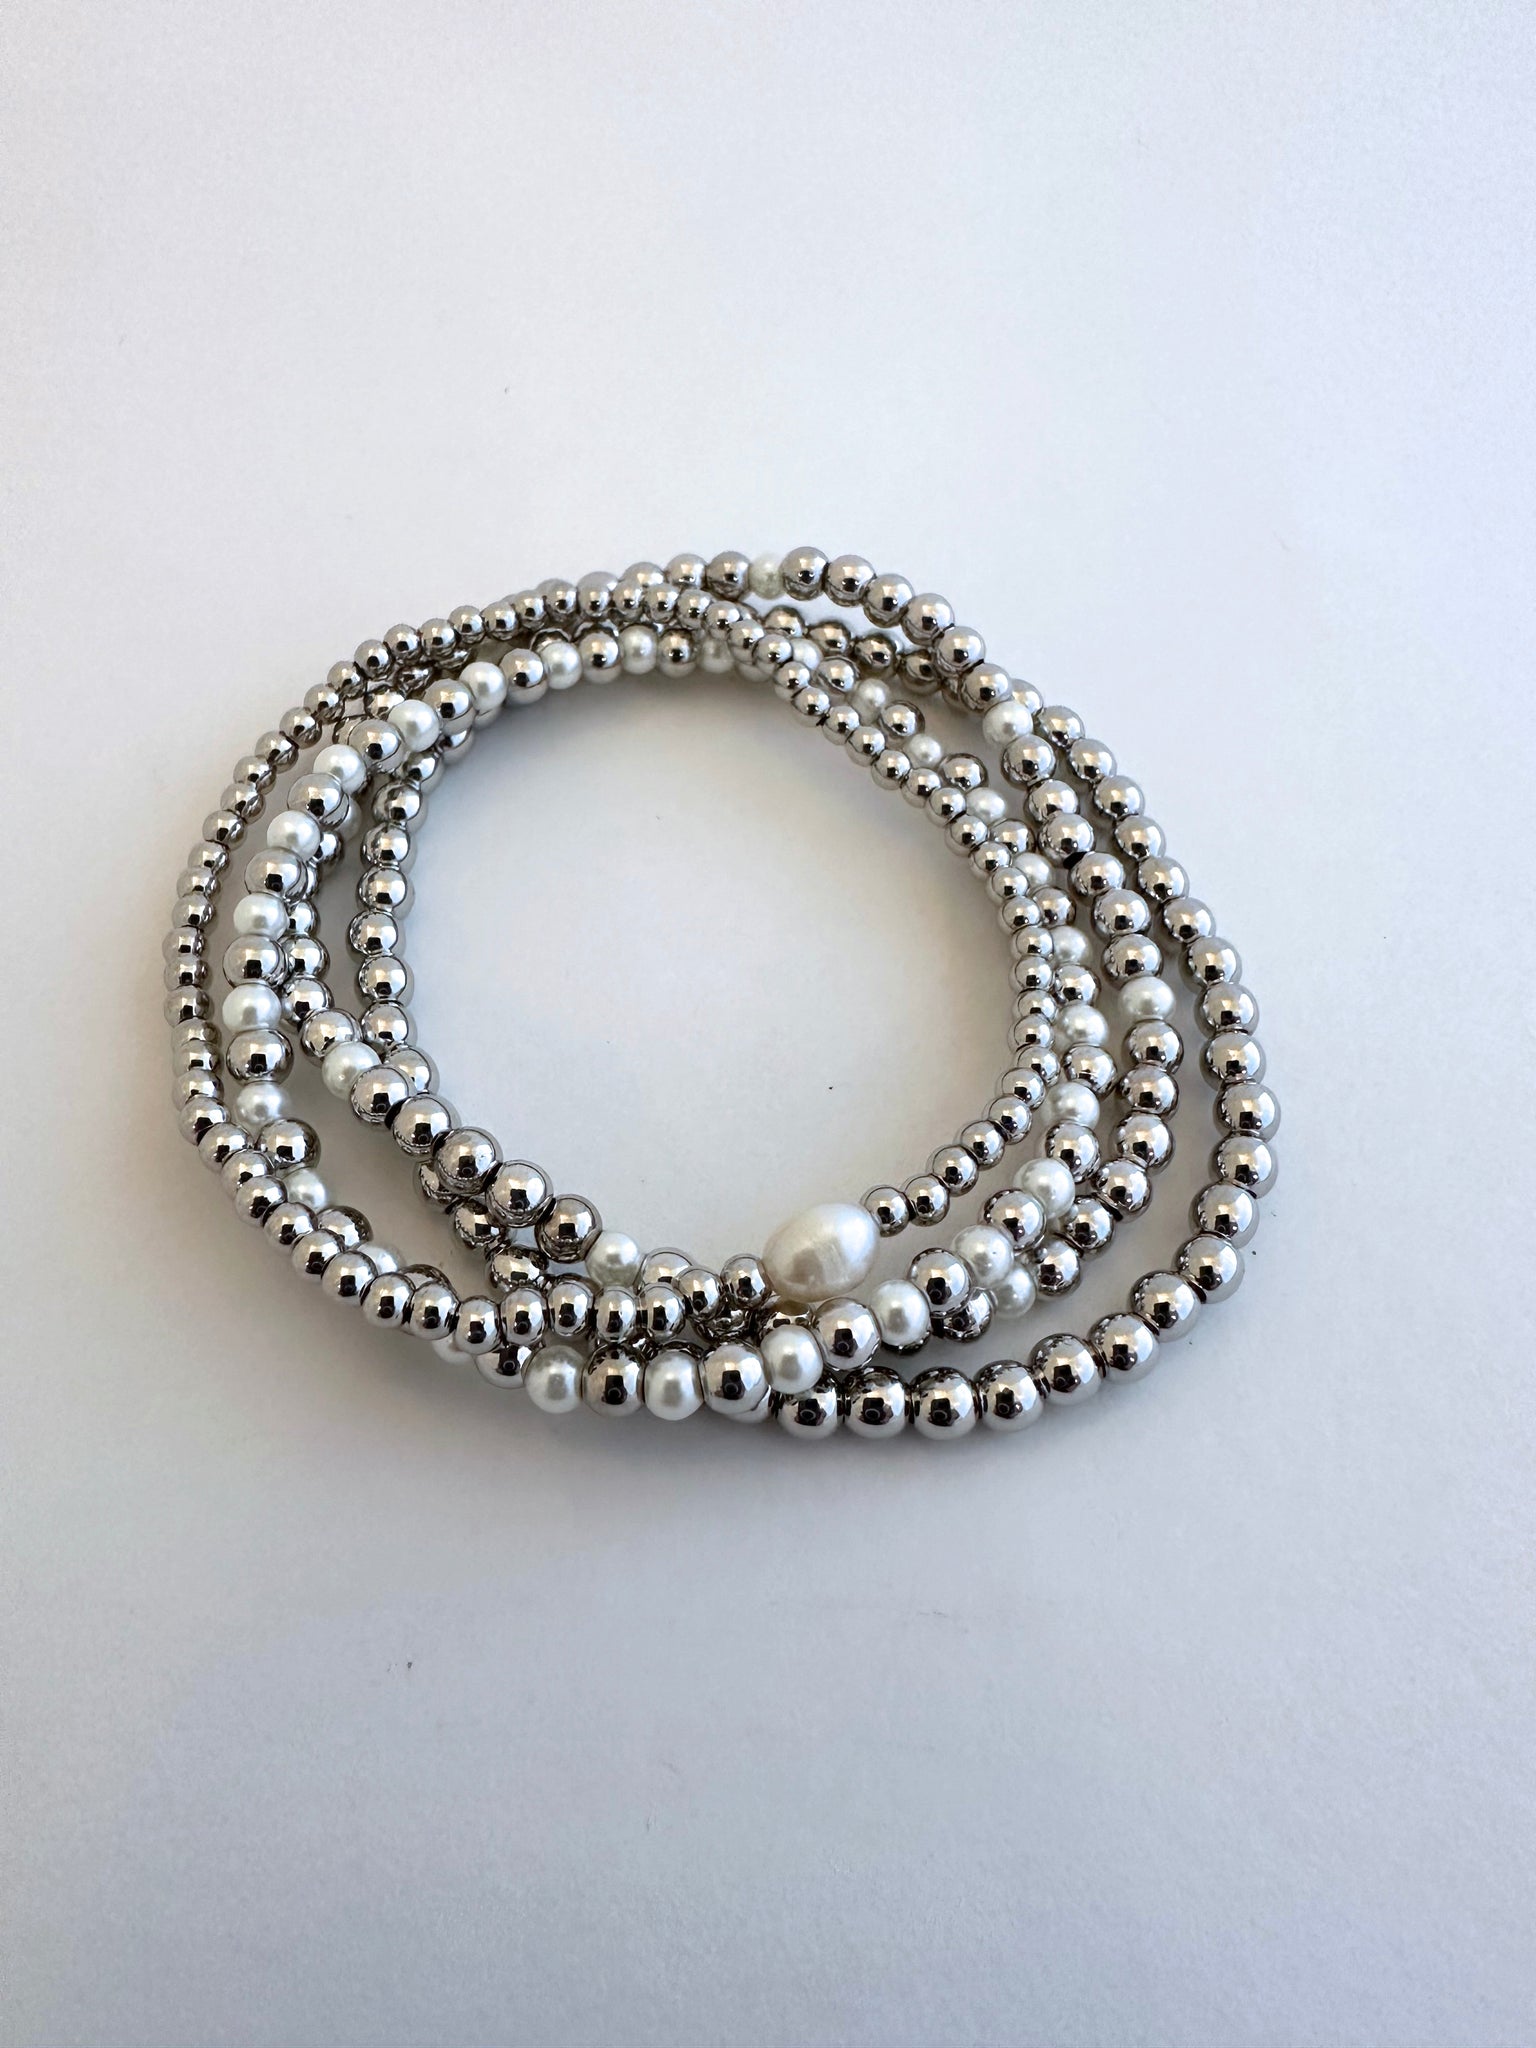 Silver Ball Bracelet Set - 4 pieces